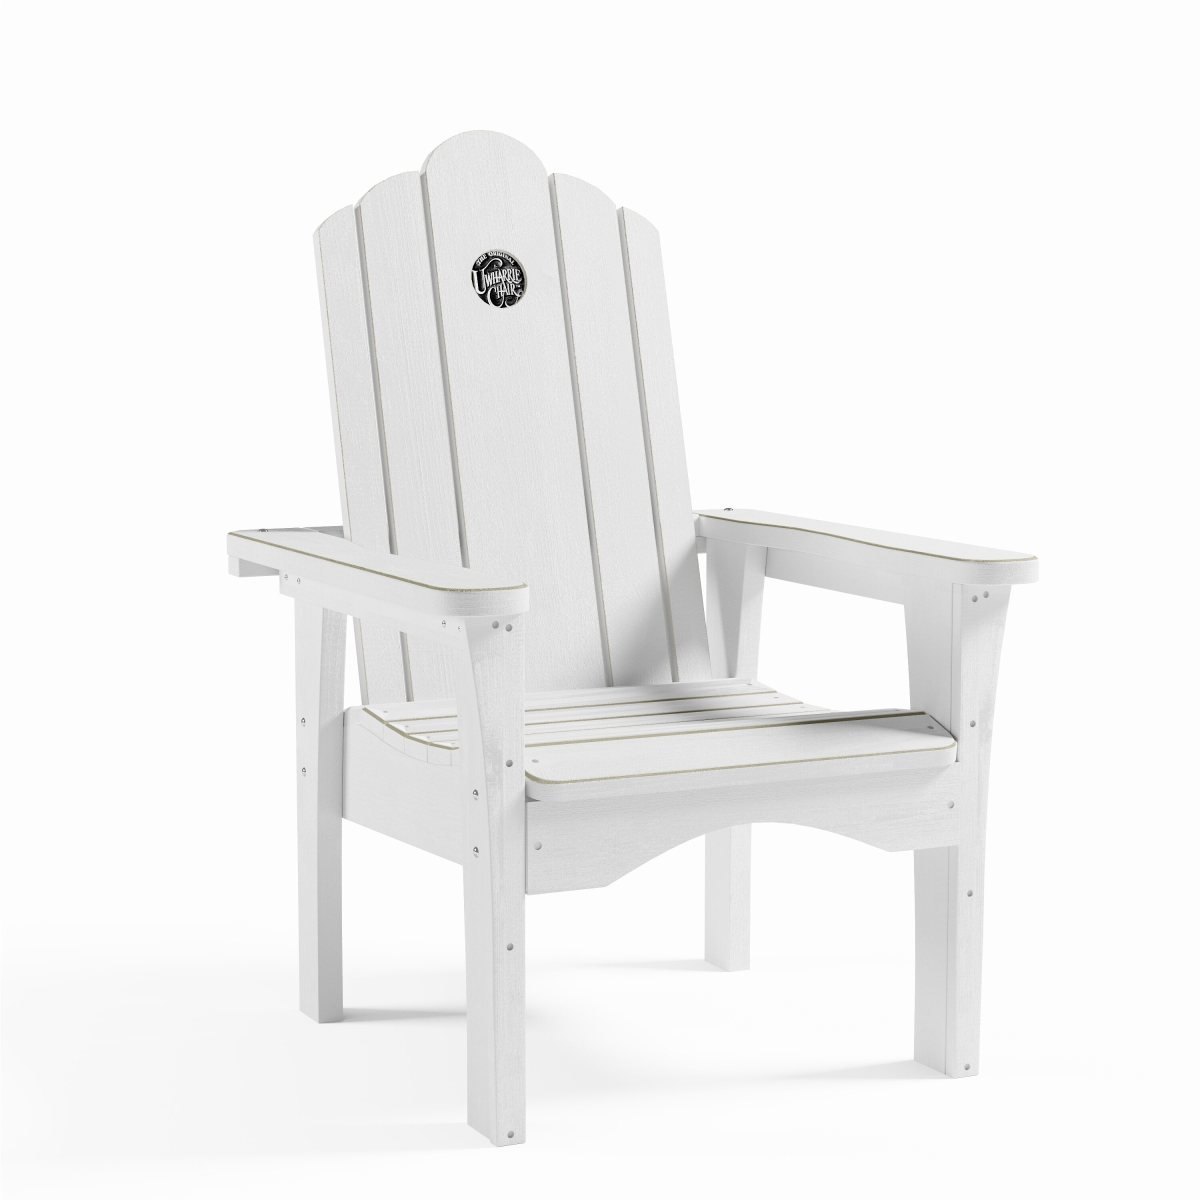 S114-026 Original Wood Lounge Chair, B.t. Aqua Pine - 30.5 X 33.5 X 43.5 In.